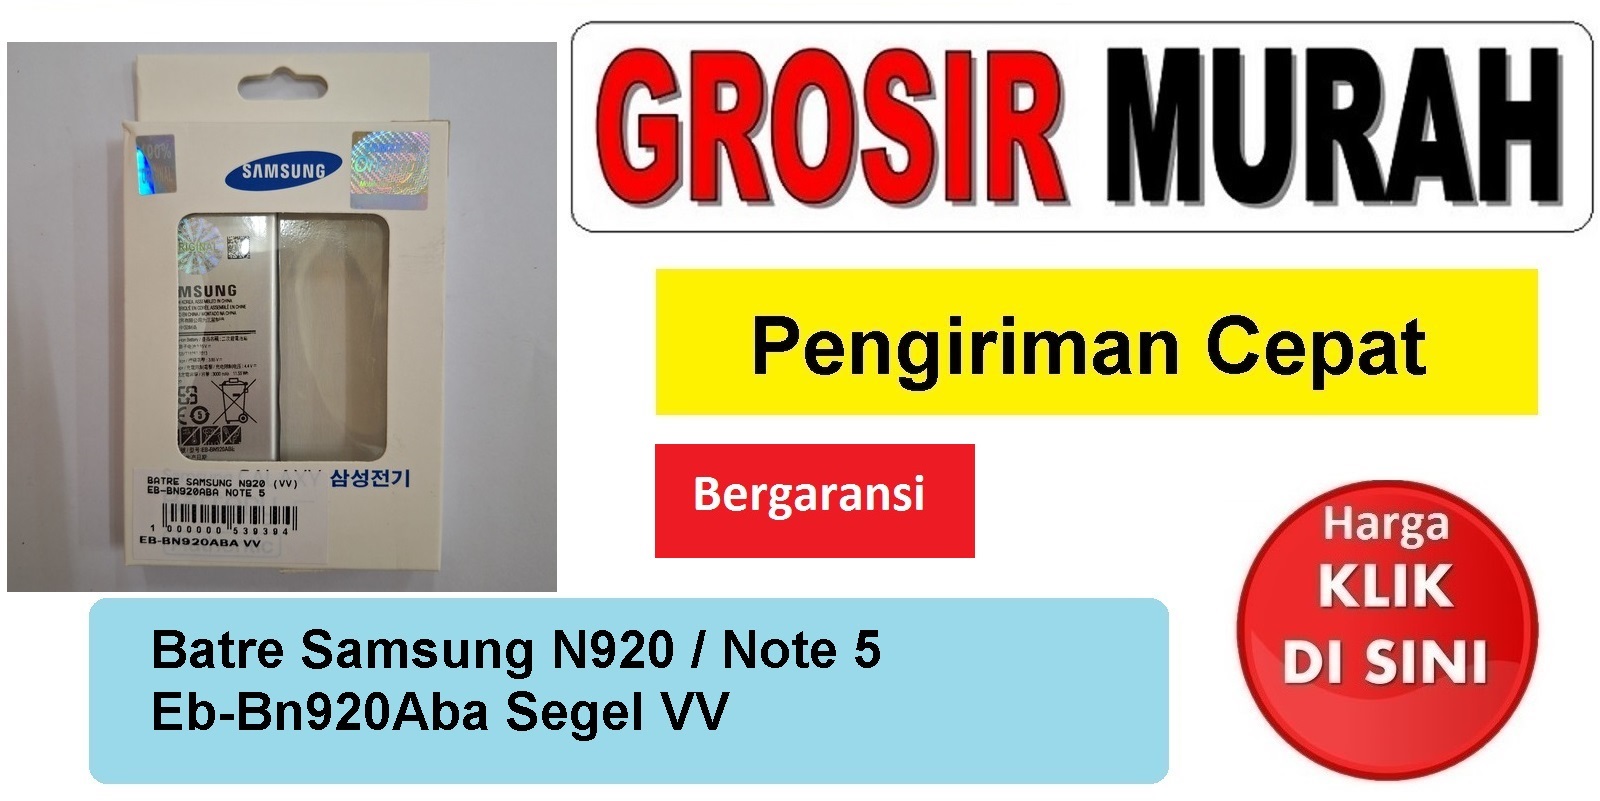 Batre Samsung N920 (Vv) Eb-Bn920Aba Note 5 Baterai Battery Bergaransi Batere Spare Part Hp Grosir